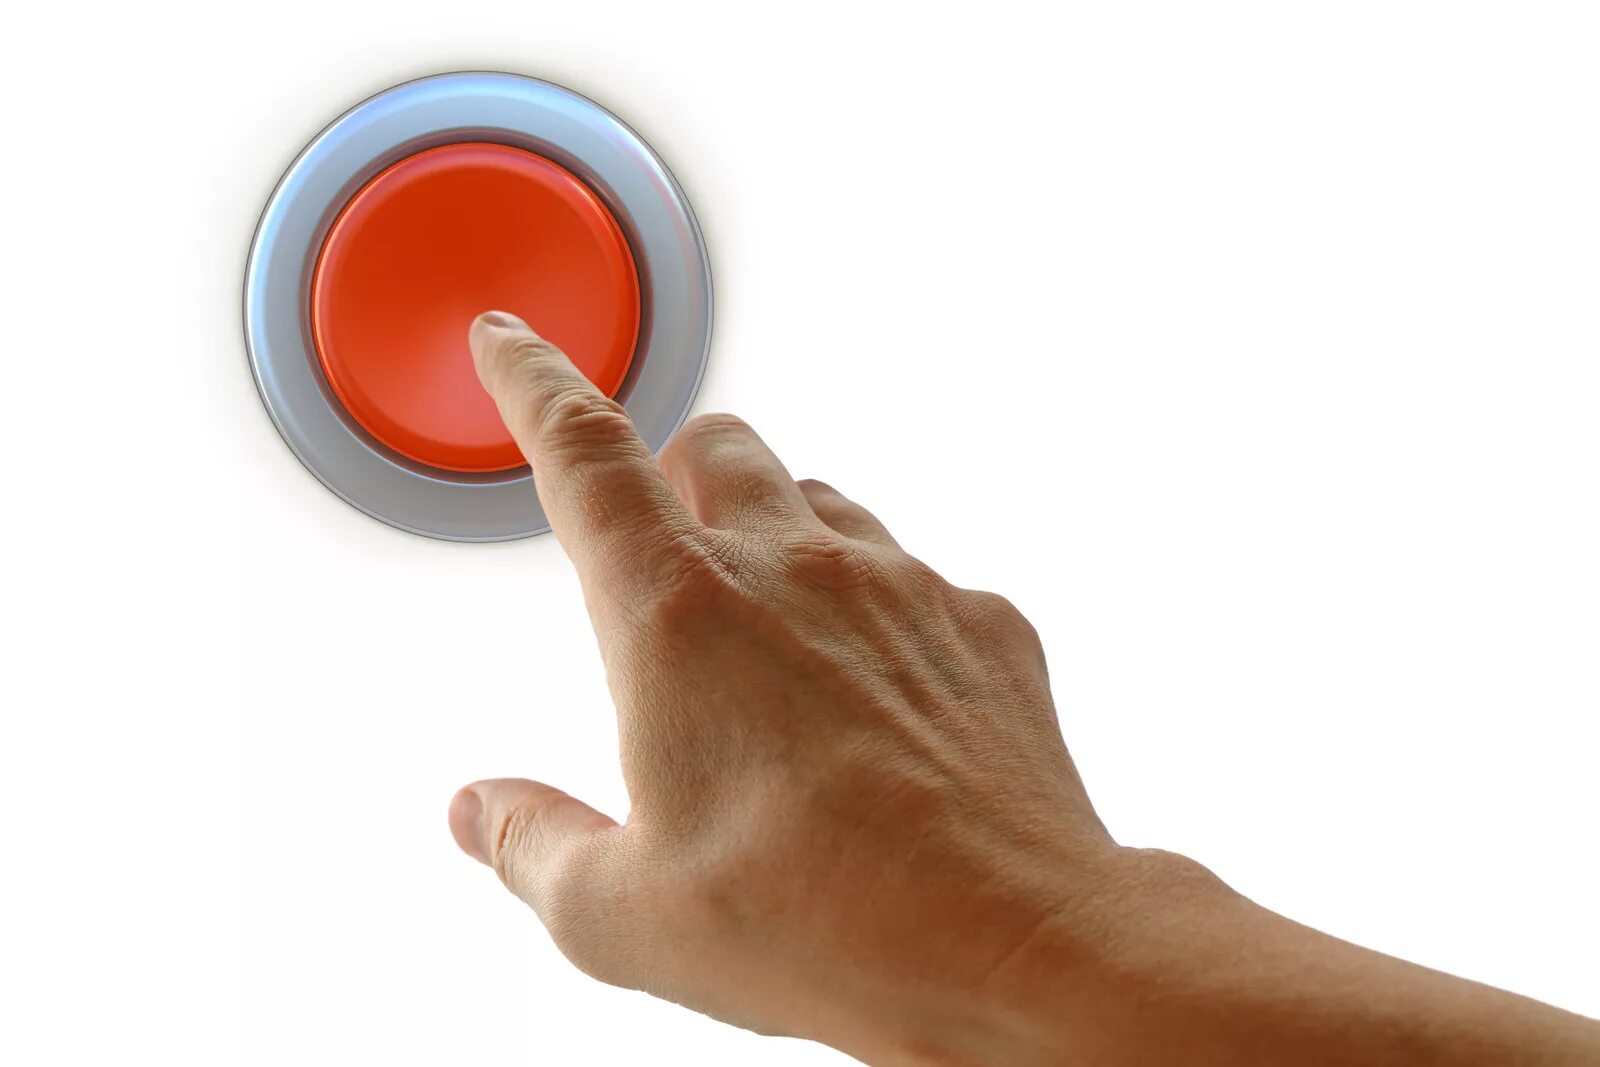 Нажми на 1 кнопку. Нажатие кнопки. Нажать на кнопку. Палец нажимает на кнопку. Нажать на красную кнопку.